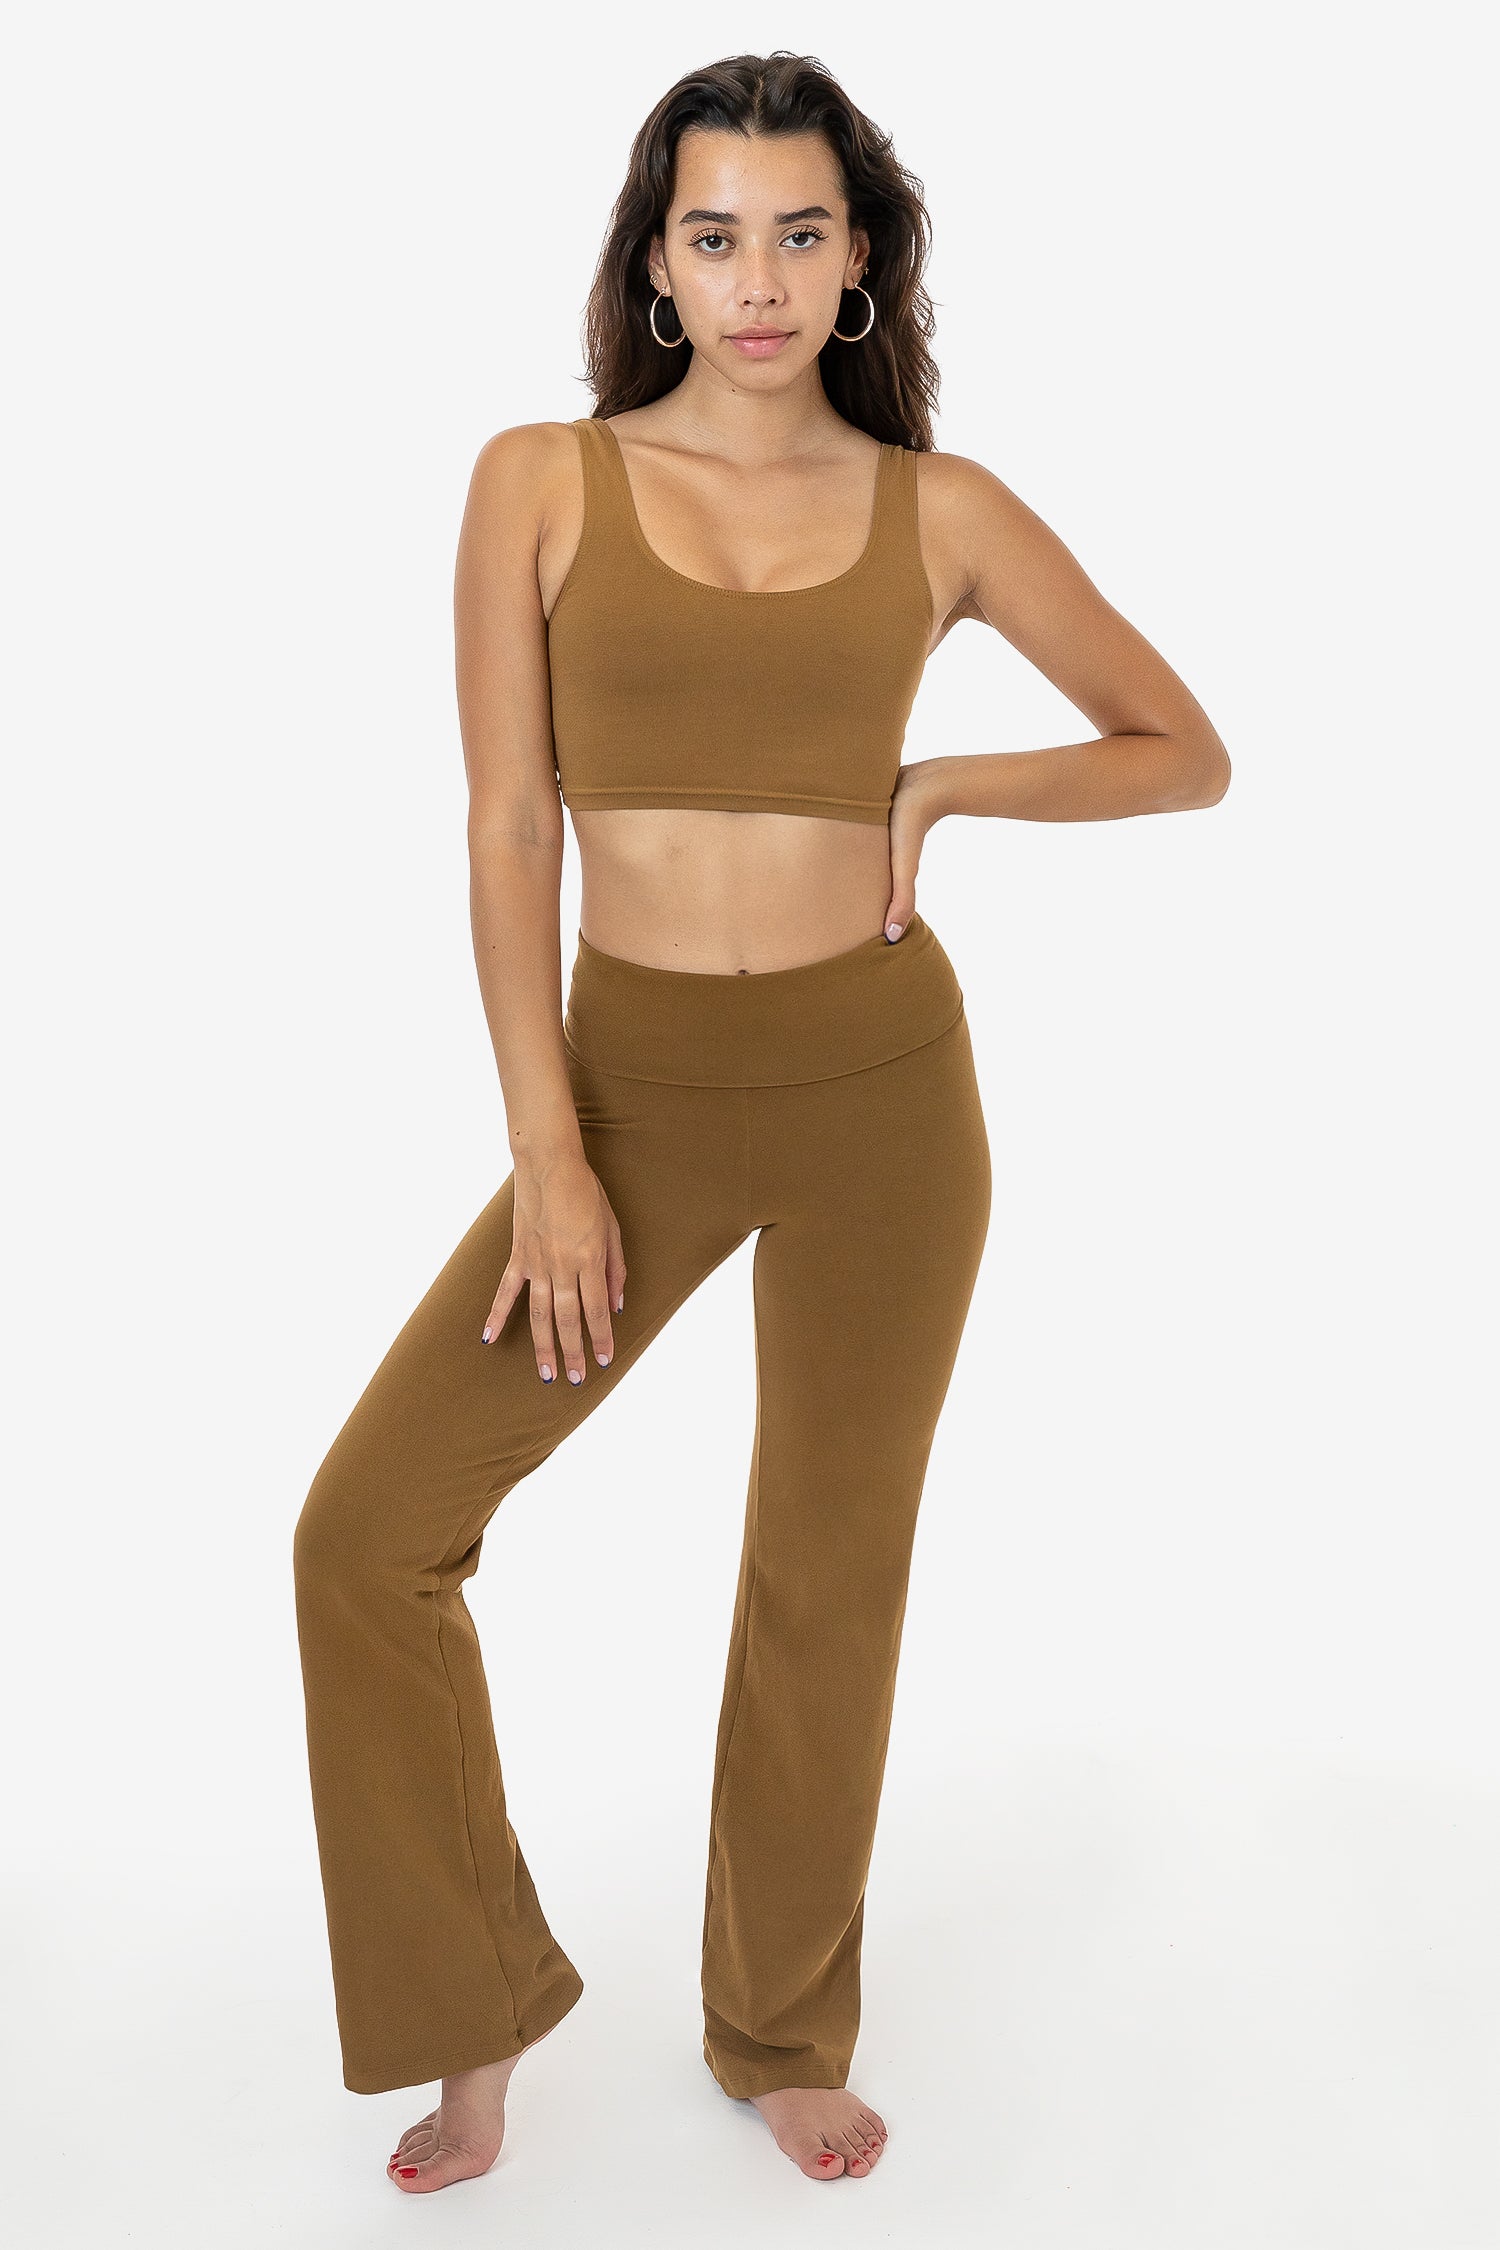 Johnson's Creation Girl cotton-lycra legging - Made in Canada — Goldtex